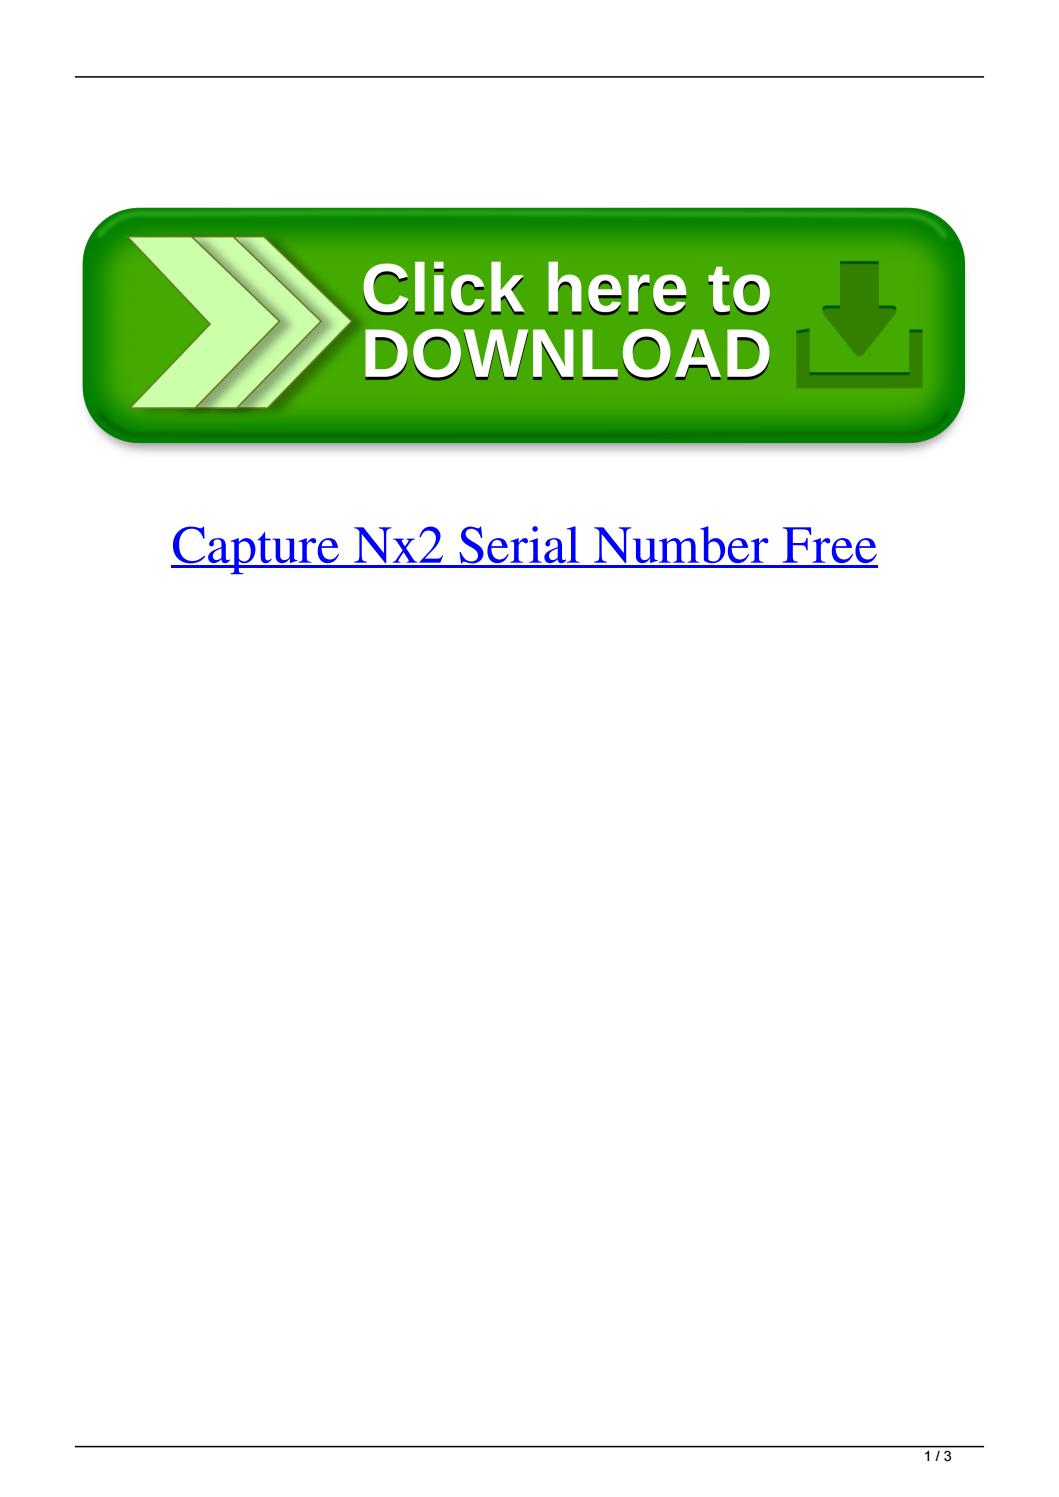 Nikon Nx2 Download For Mac